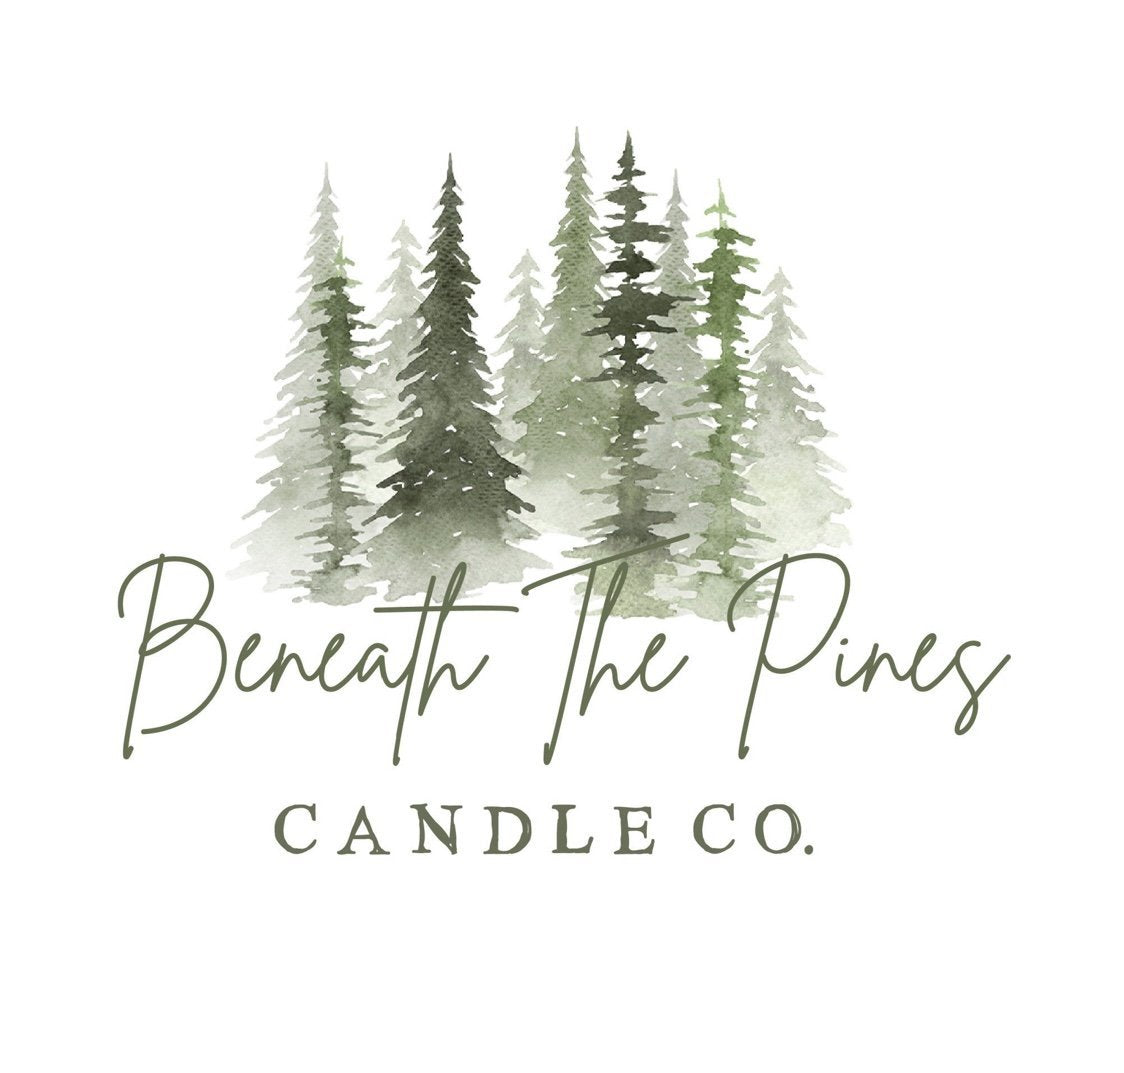 Mountain Pine Wax Melts – Pedigree Candle Co.